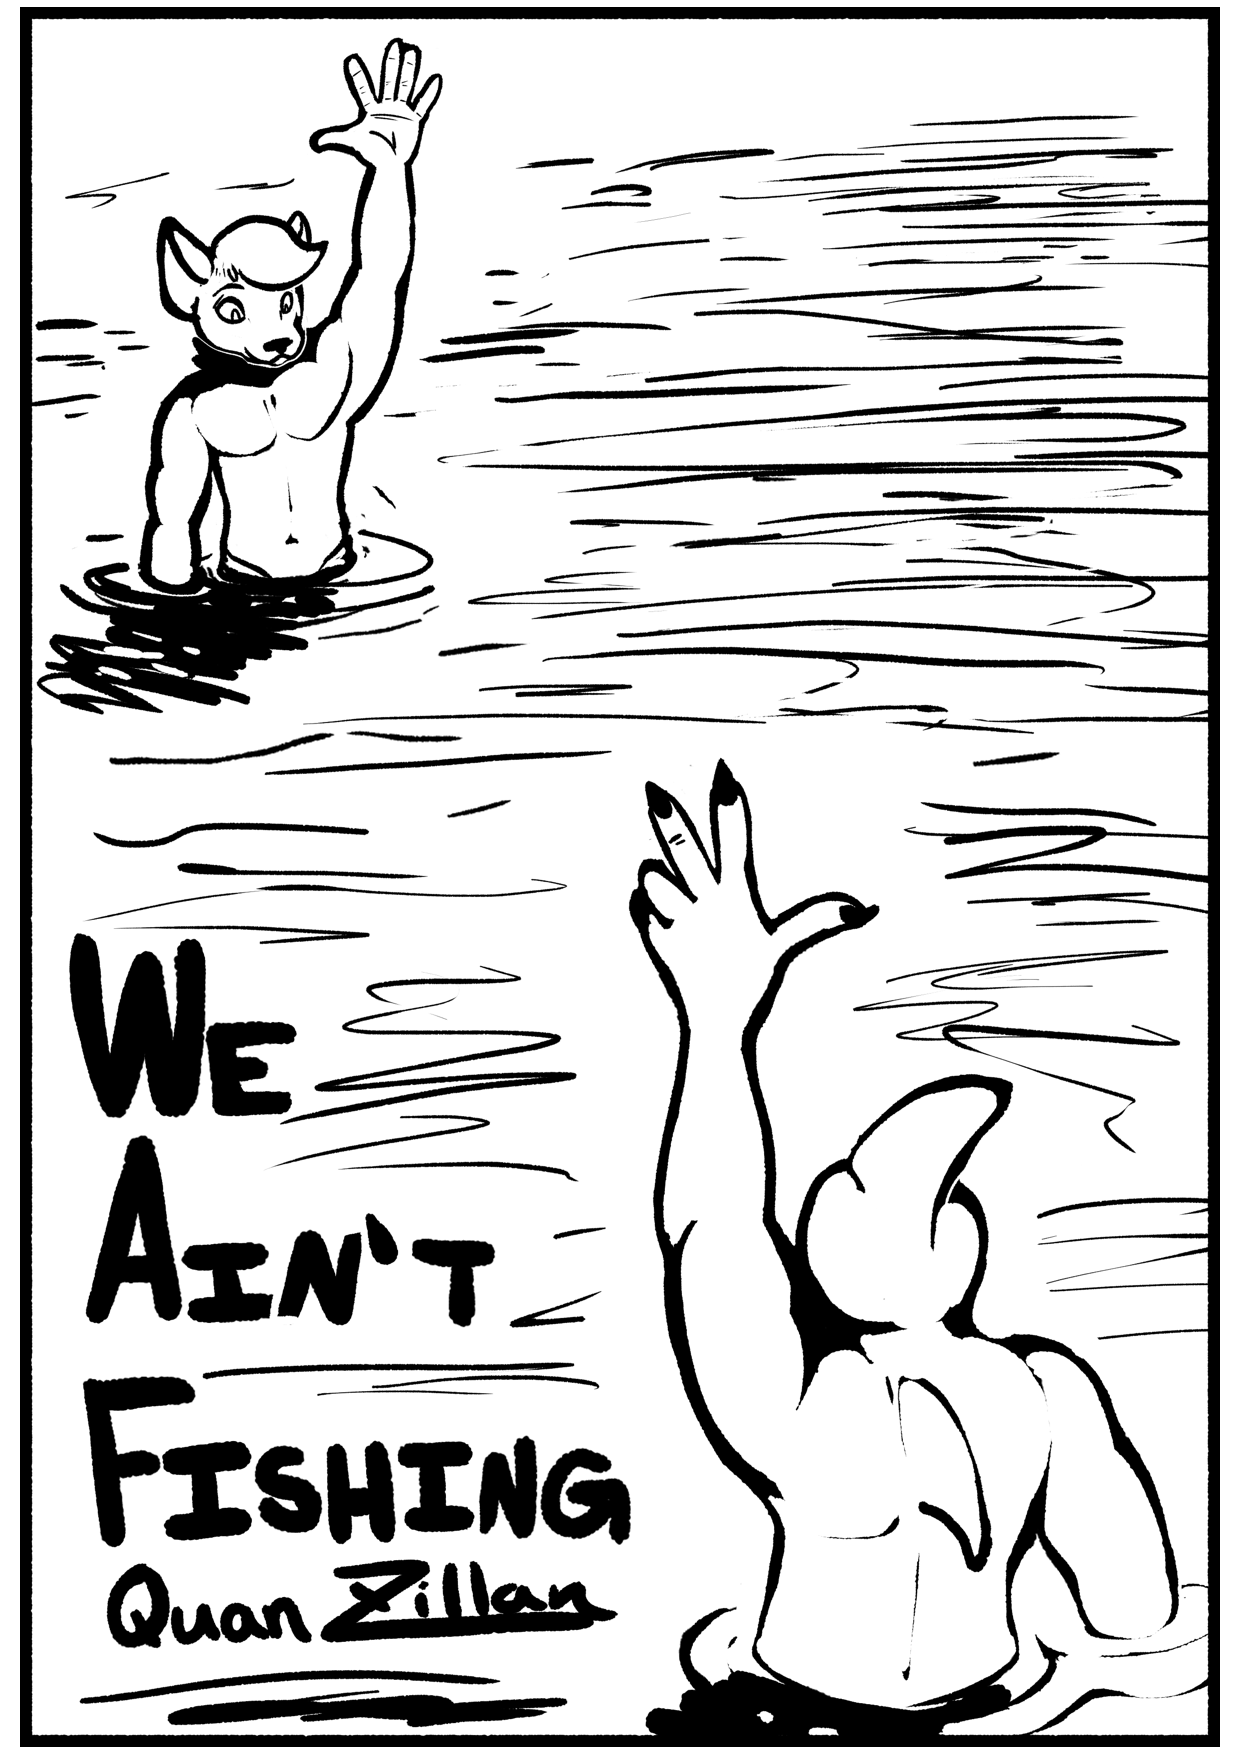 [QwaxiLixard] We Aint Fishing - Trang 1